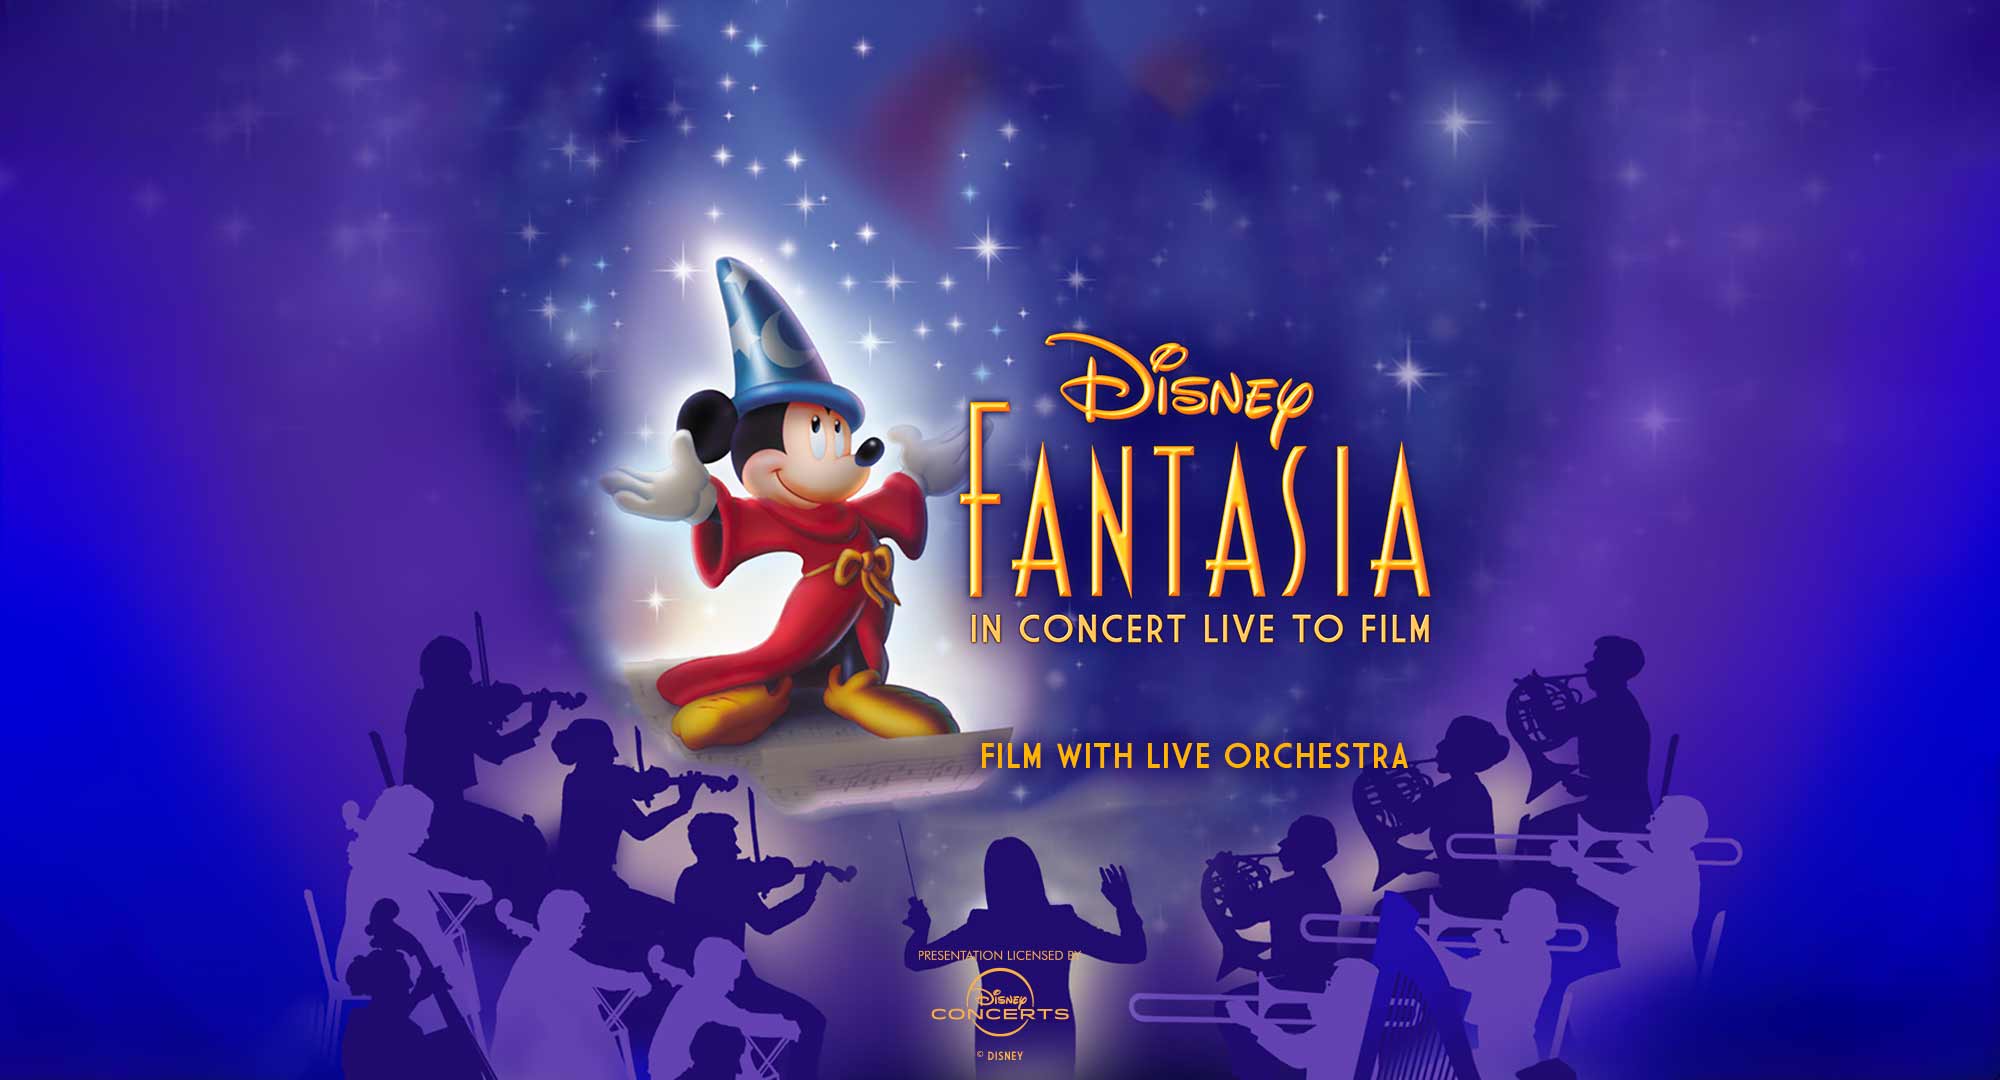 Disney Fantasia in Concert (poster)